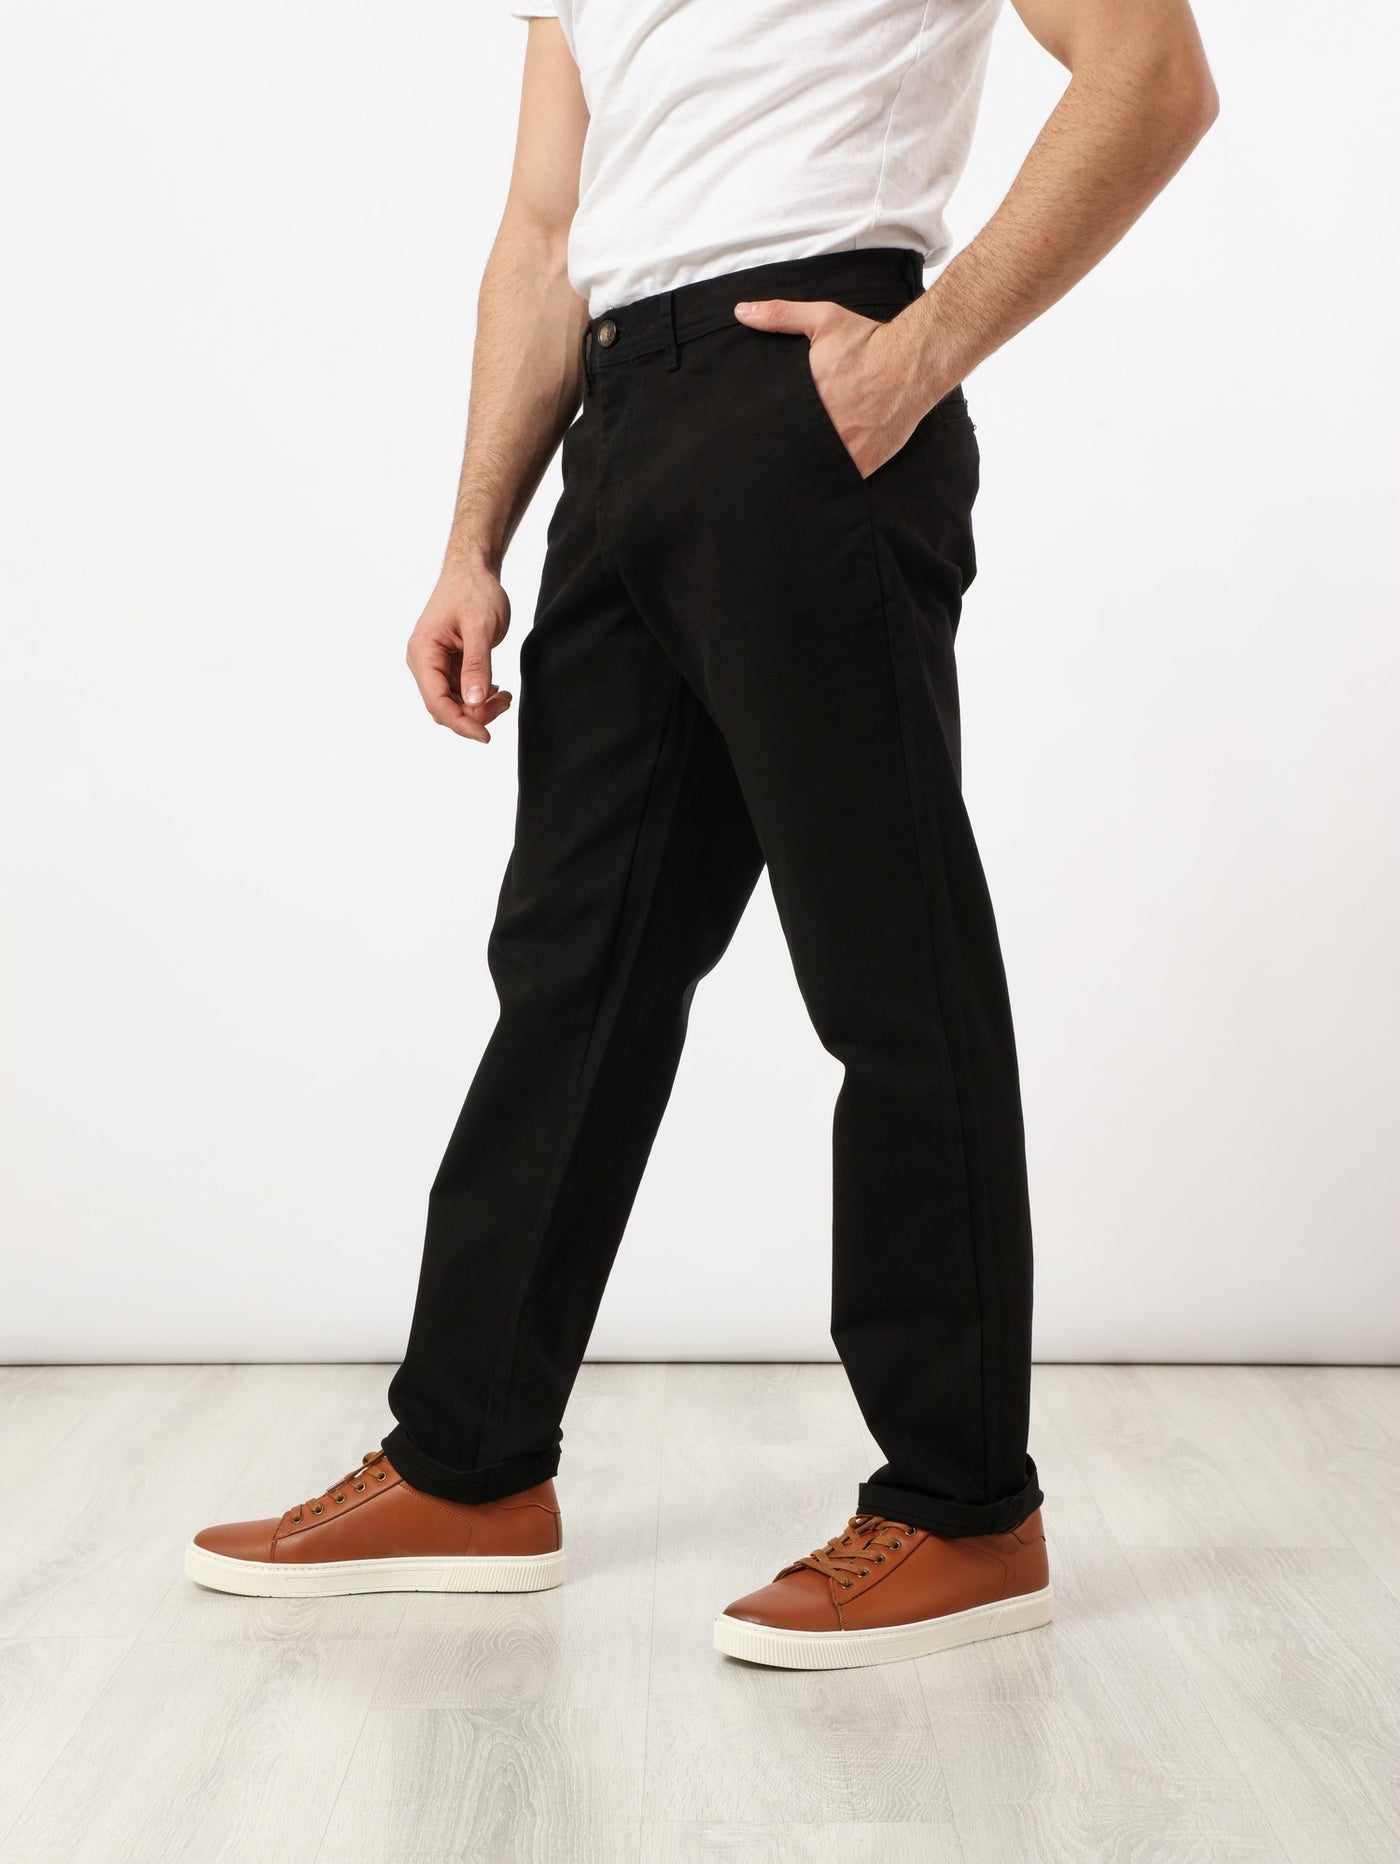 Pants - Side Pocket - Belt Loop